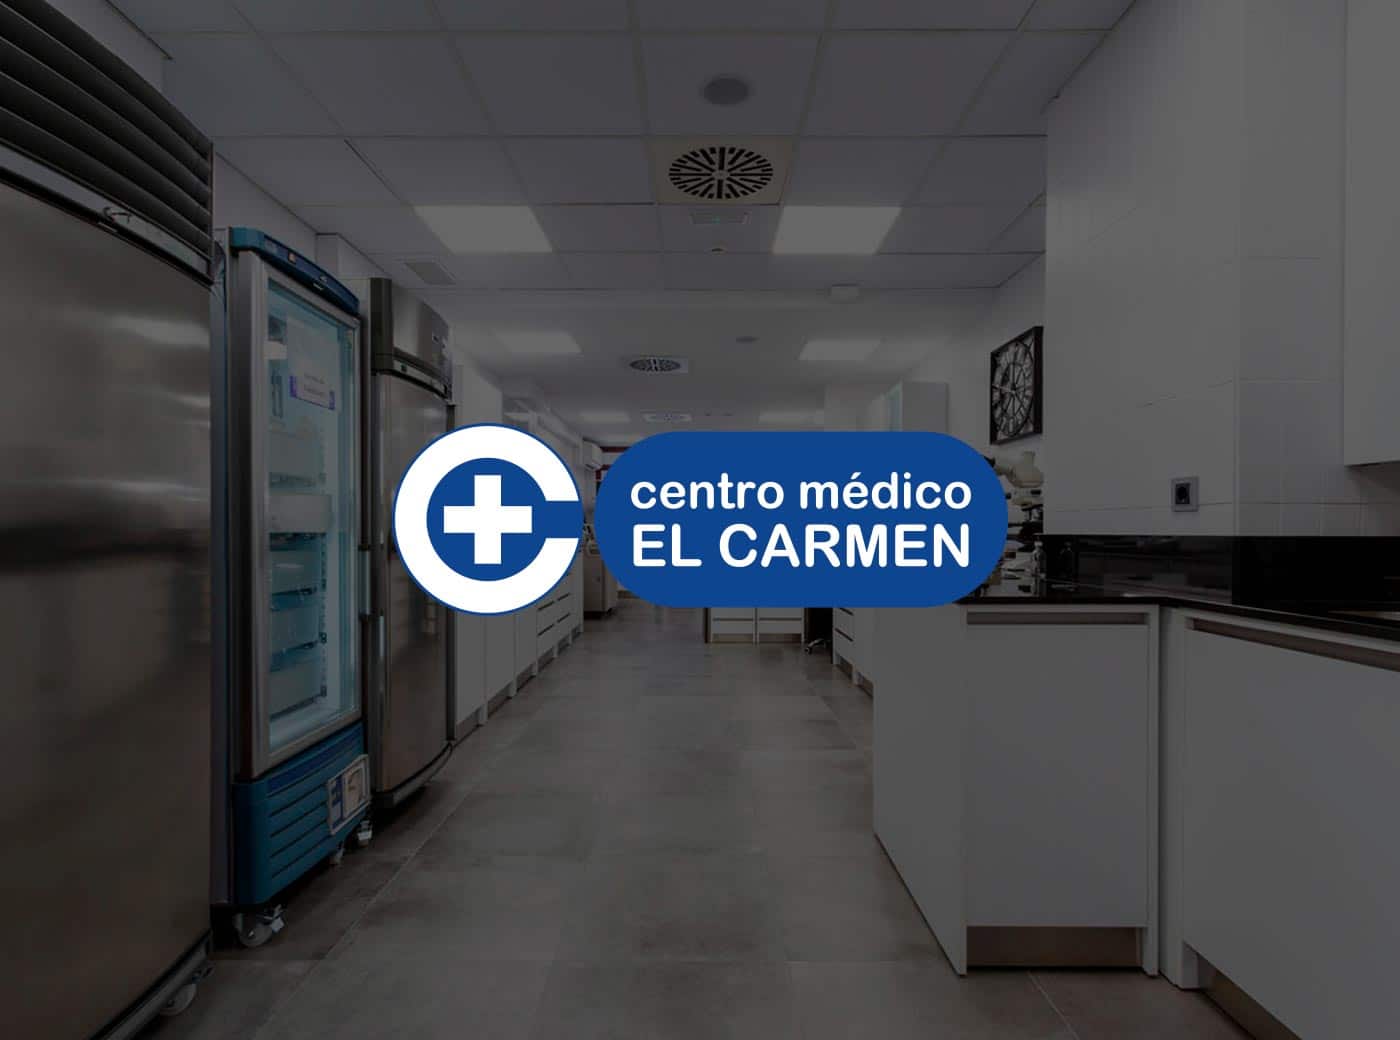 centro medico el carmen img1 - inova3 - Marketing digital desde ourense